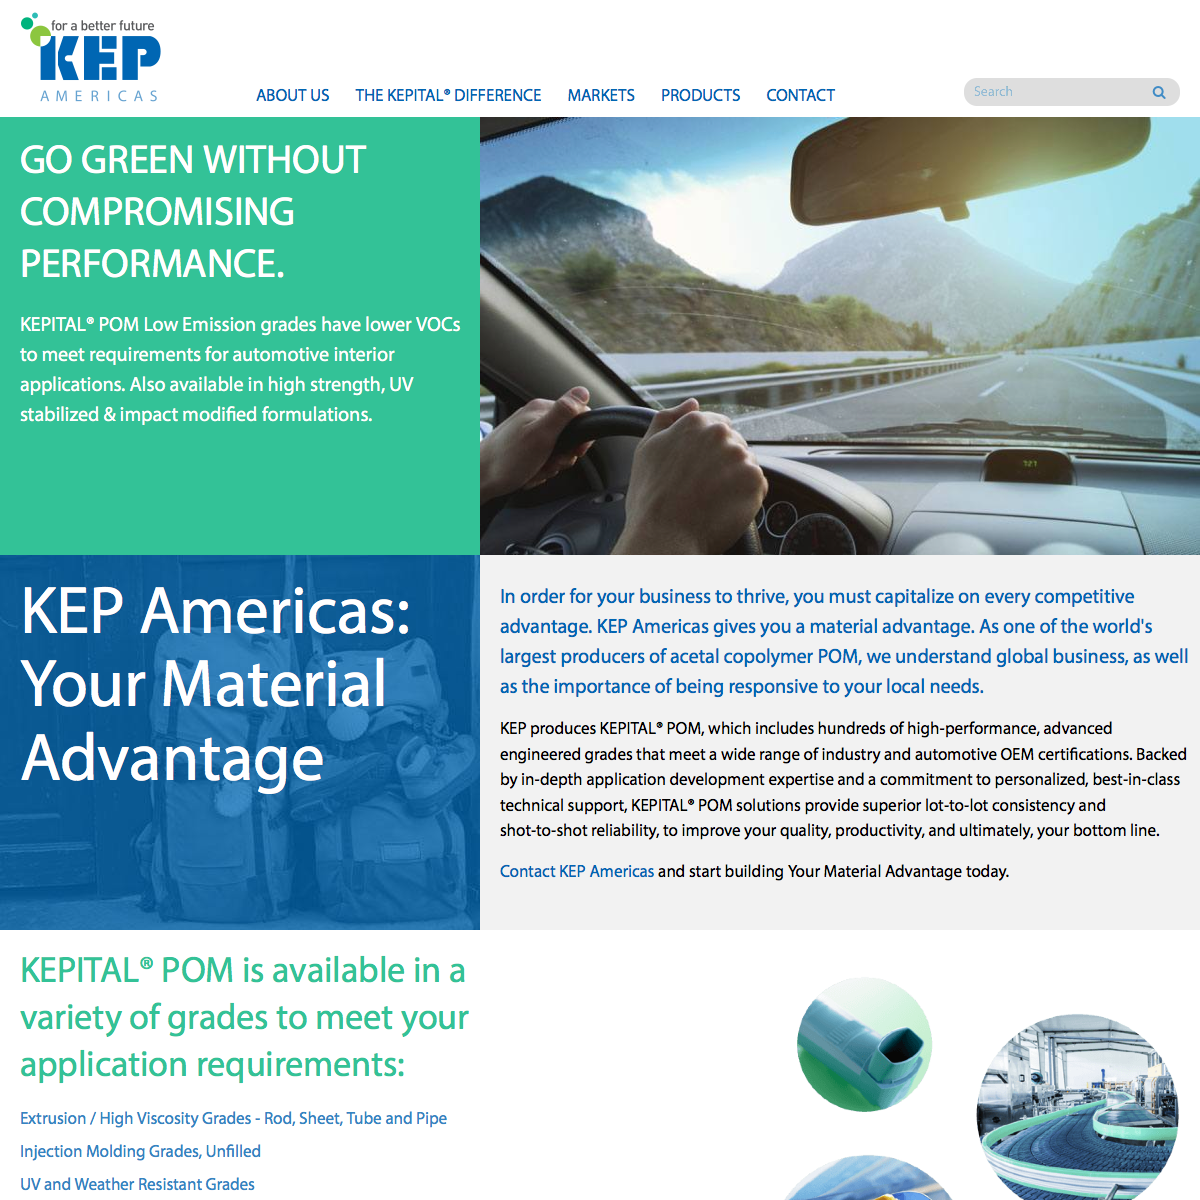 KEP Americas